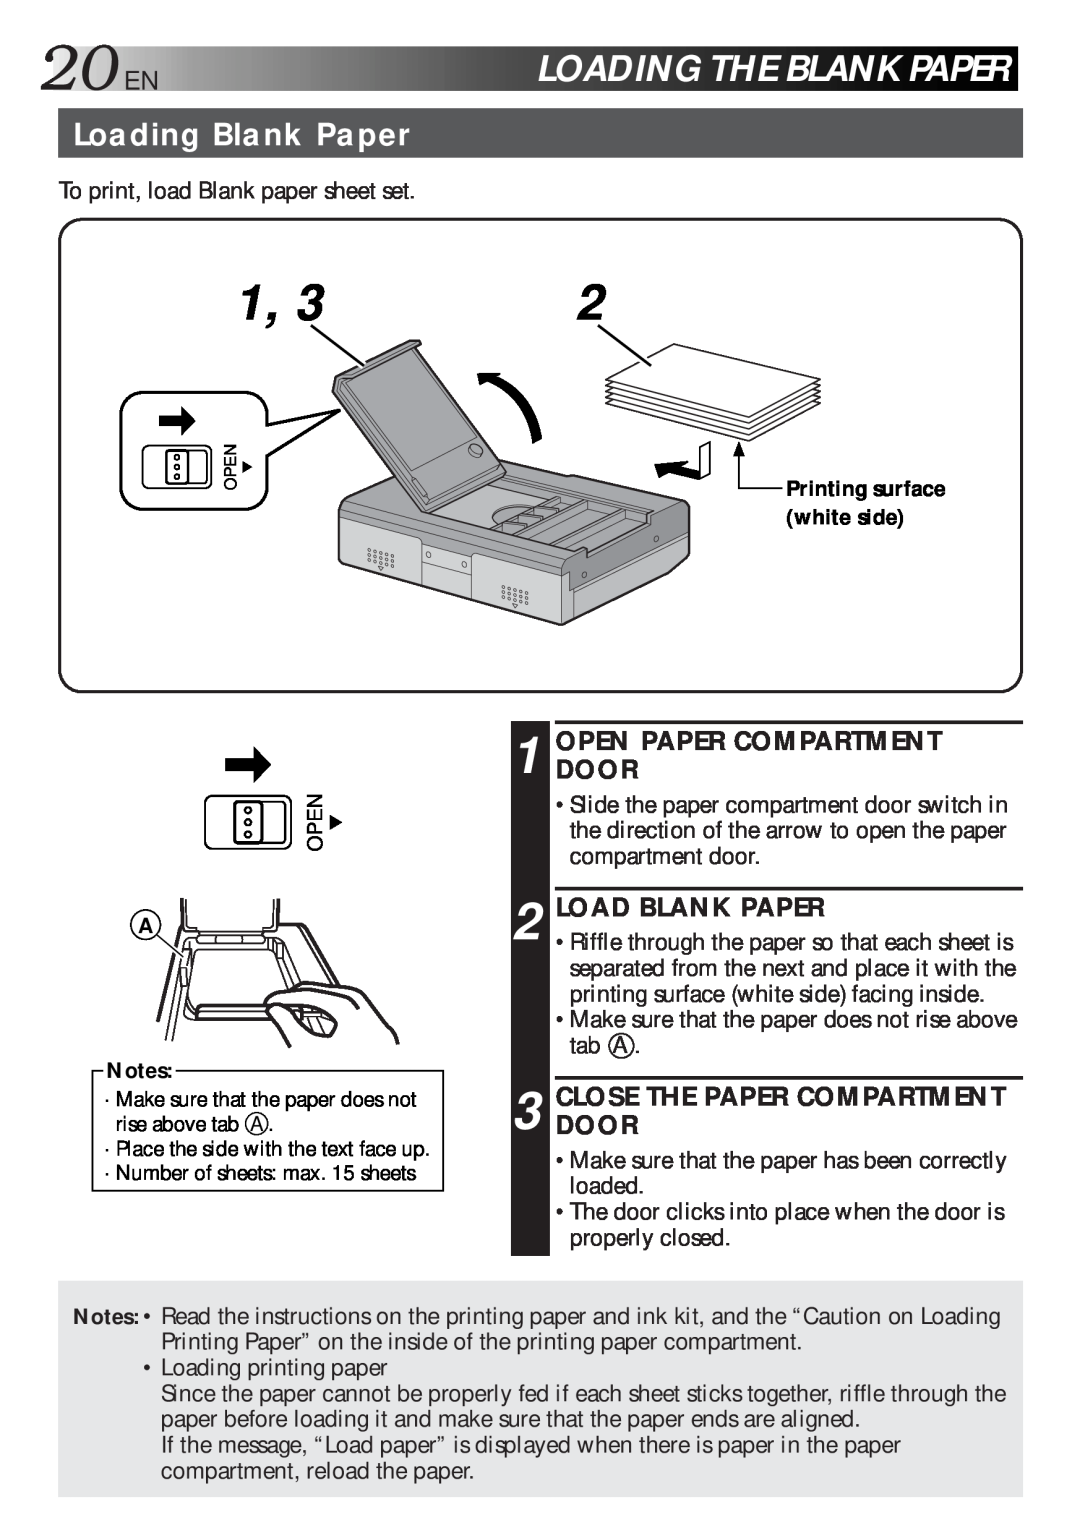 JVC GV-HT1 manual 20EN LOADINGTHE BLANKPAPER, Loading Blank Paper, Opendoorpaper Compartment, Load Blank Paper 